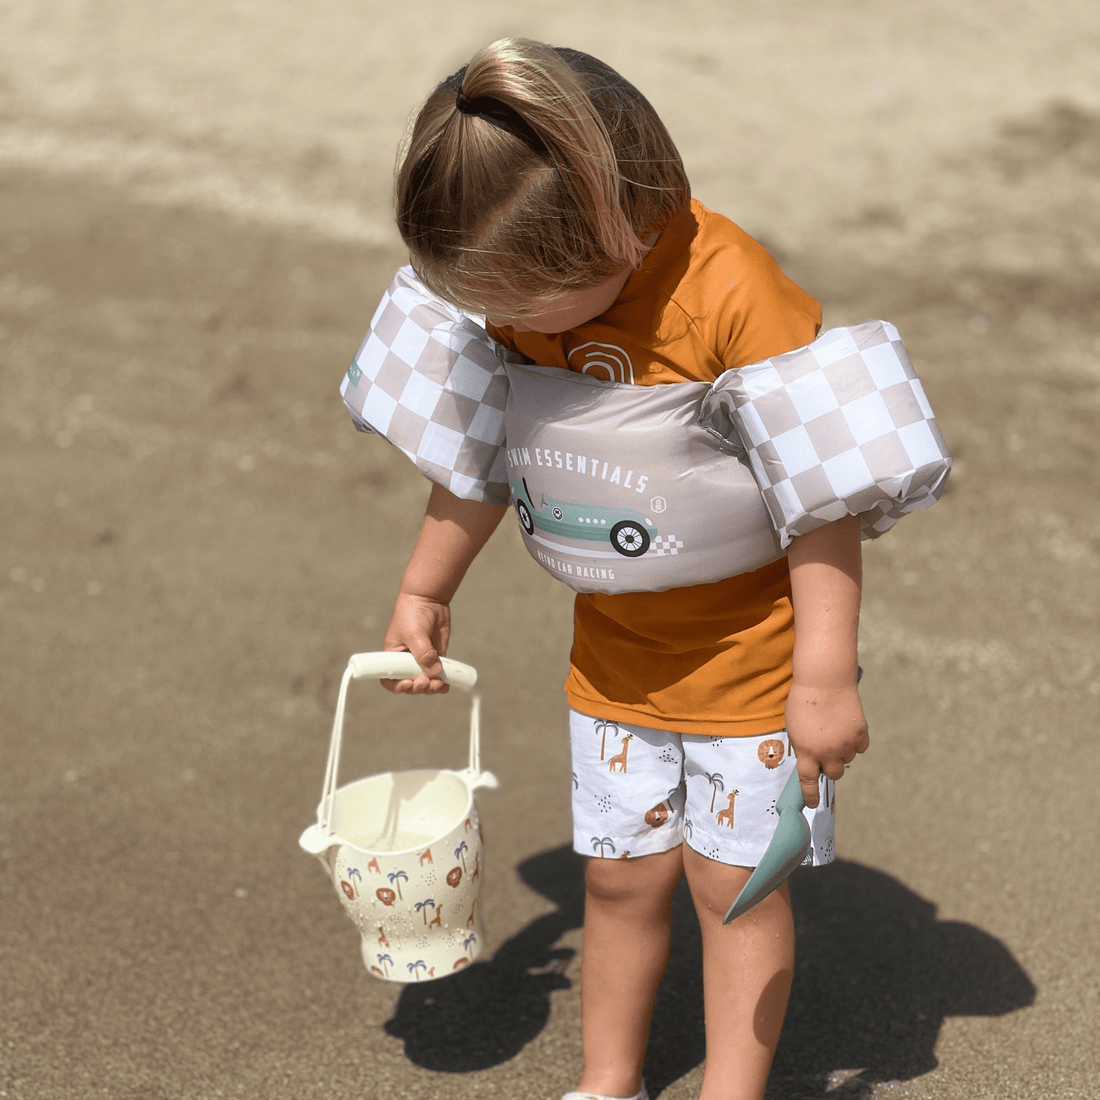 puddle-jumper-sand-check-2-6-jaar-swim-essentials-1